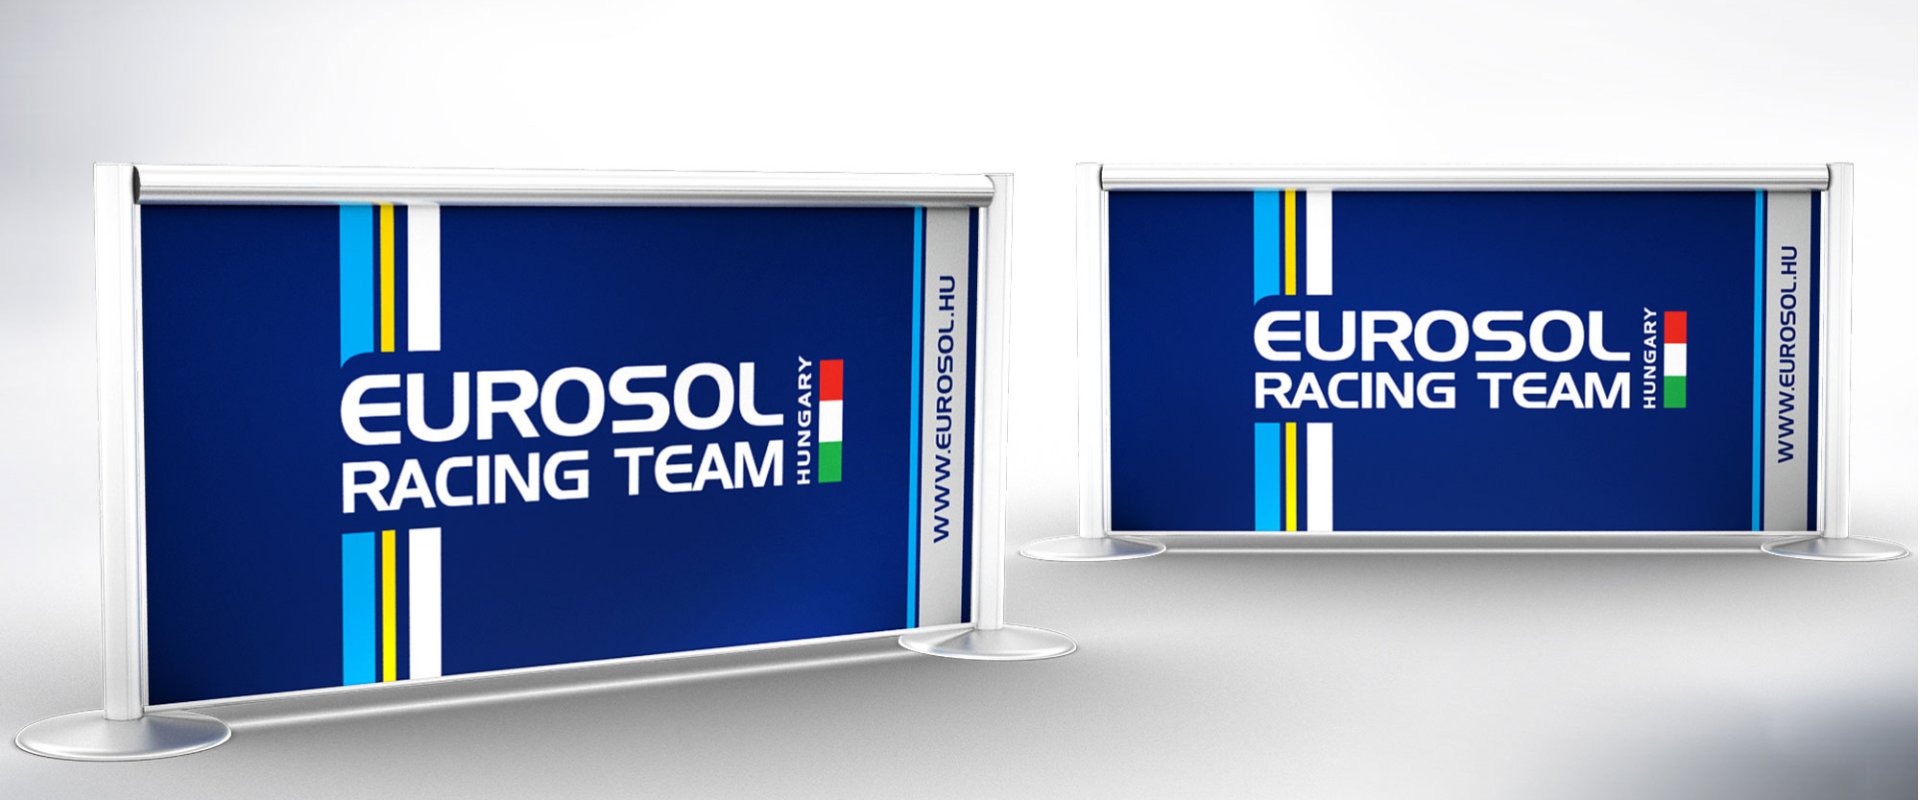 Eurosol Racing Team #1